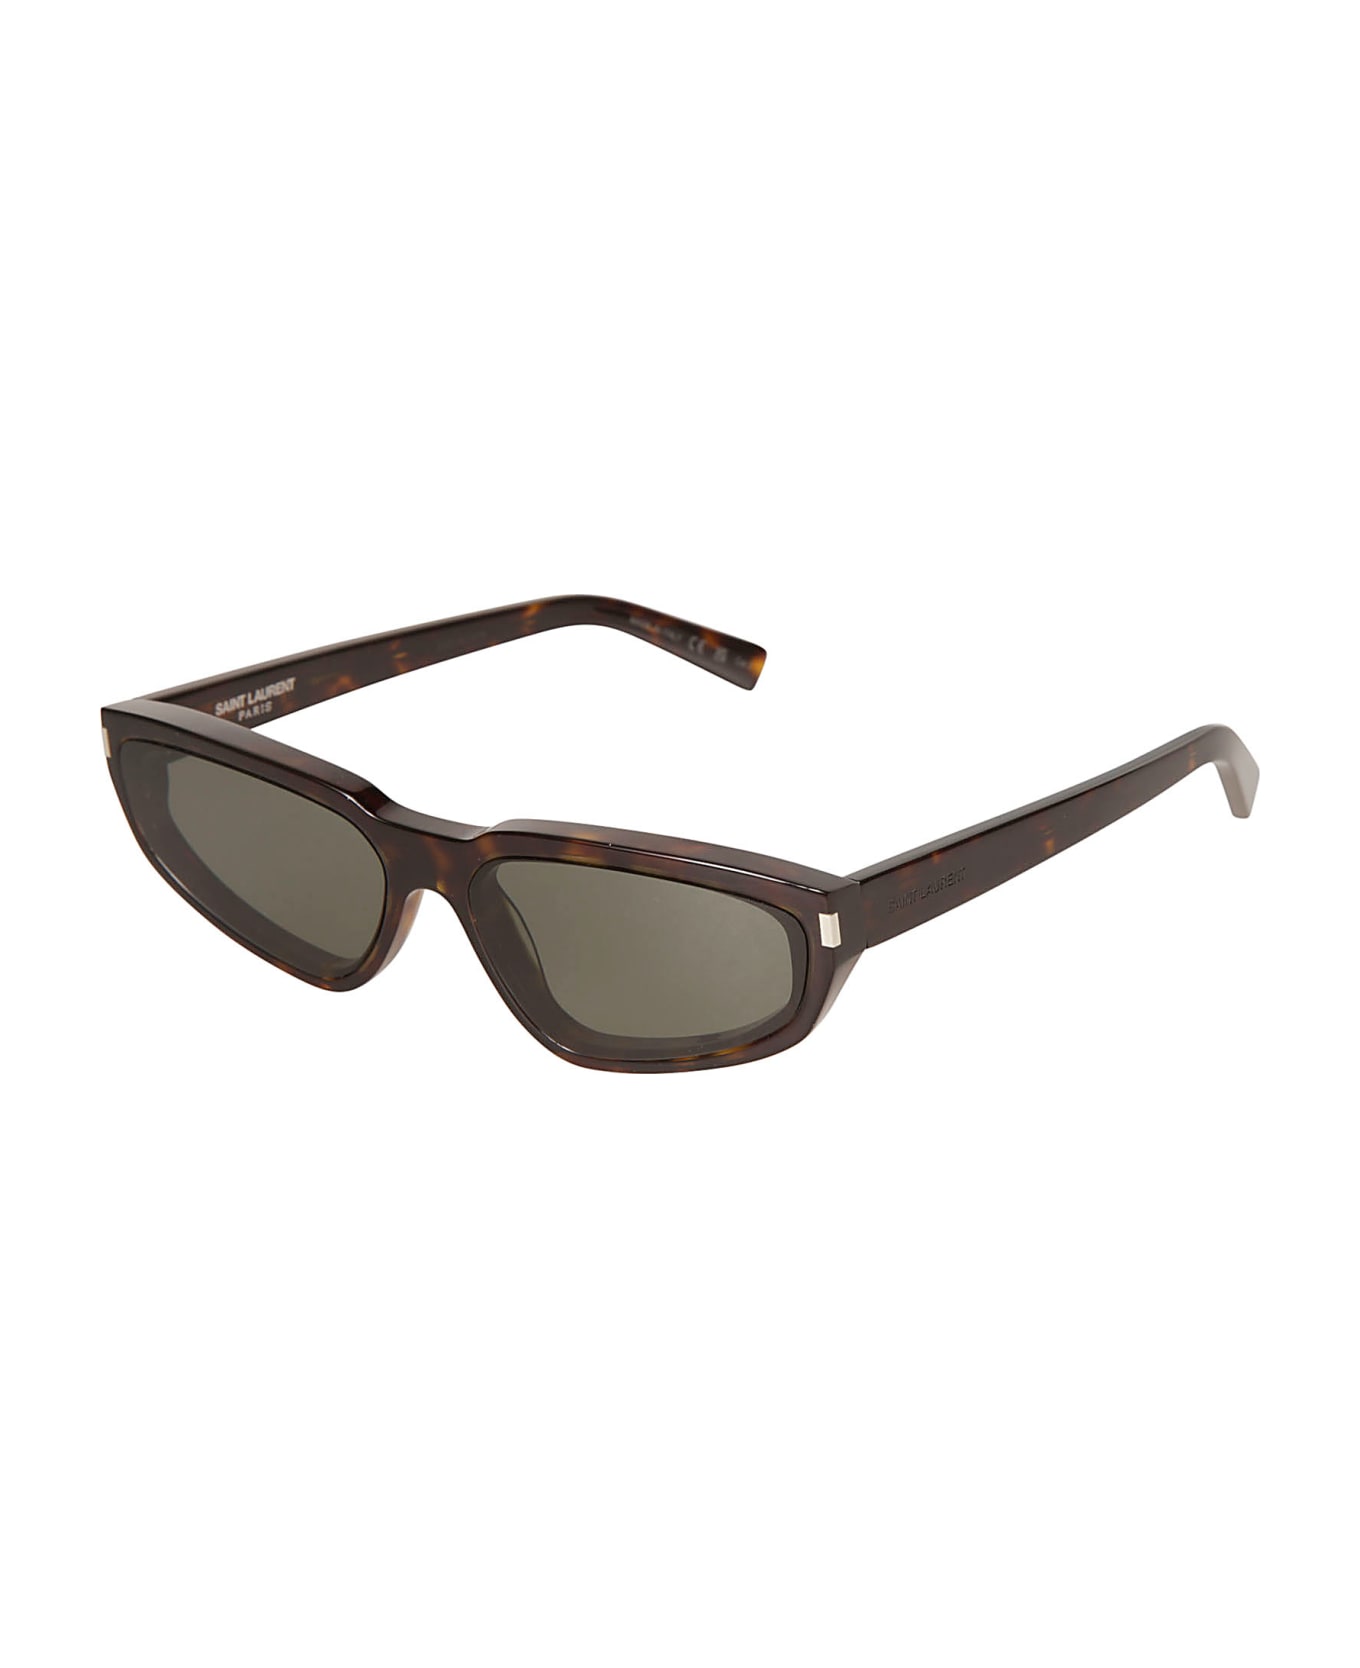 Saint Laurent Eyewear Sl 634 Nova Sunglasses - Grey